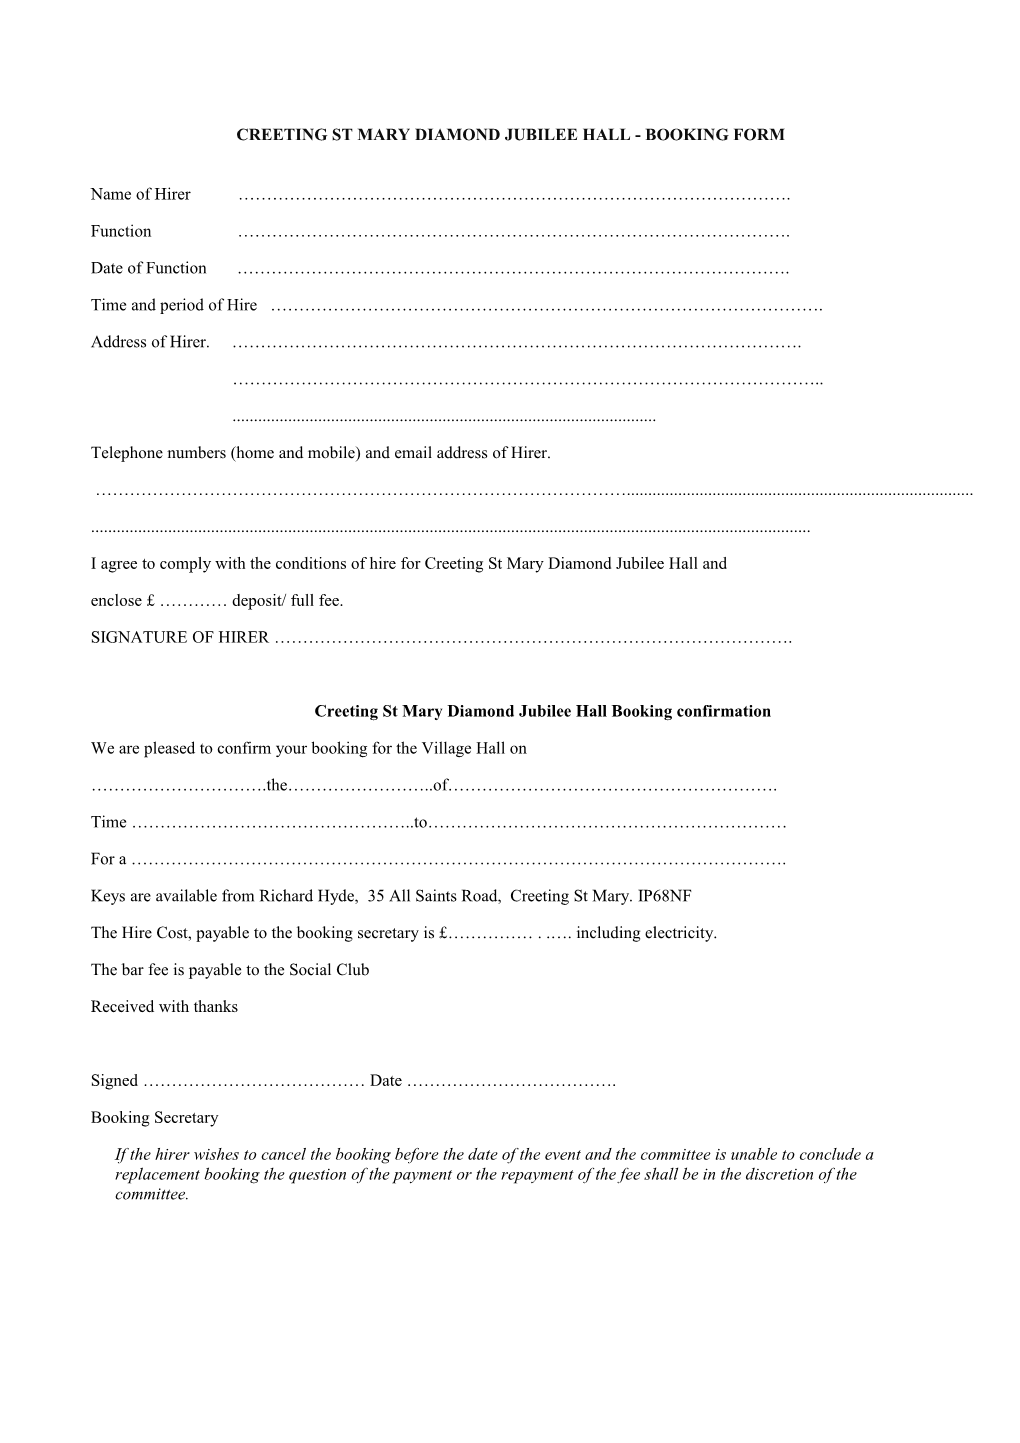 Creeting St Mary Diamond Jubilee Hall - Booking Form